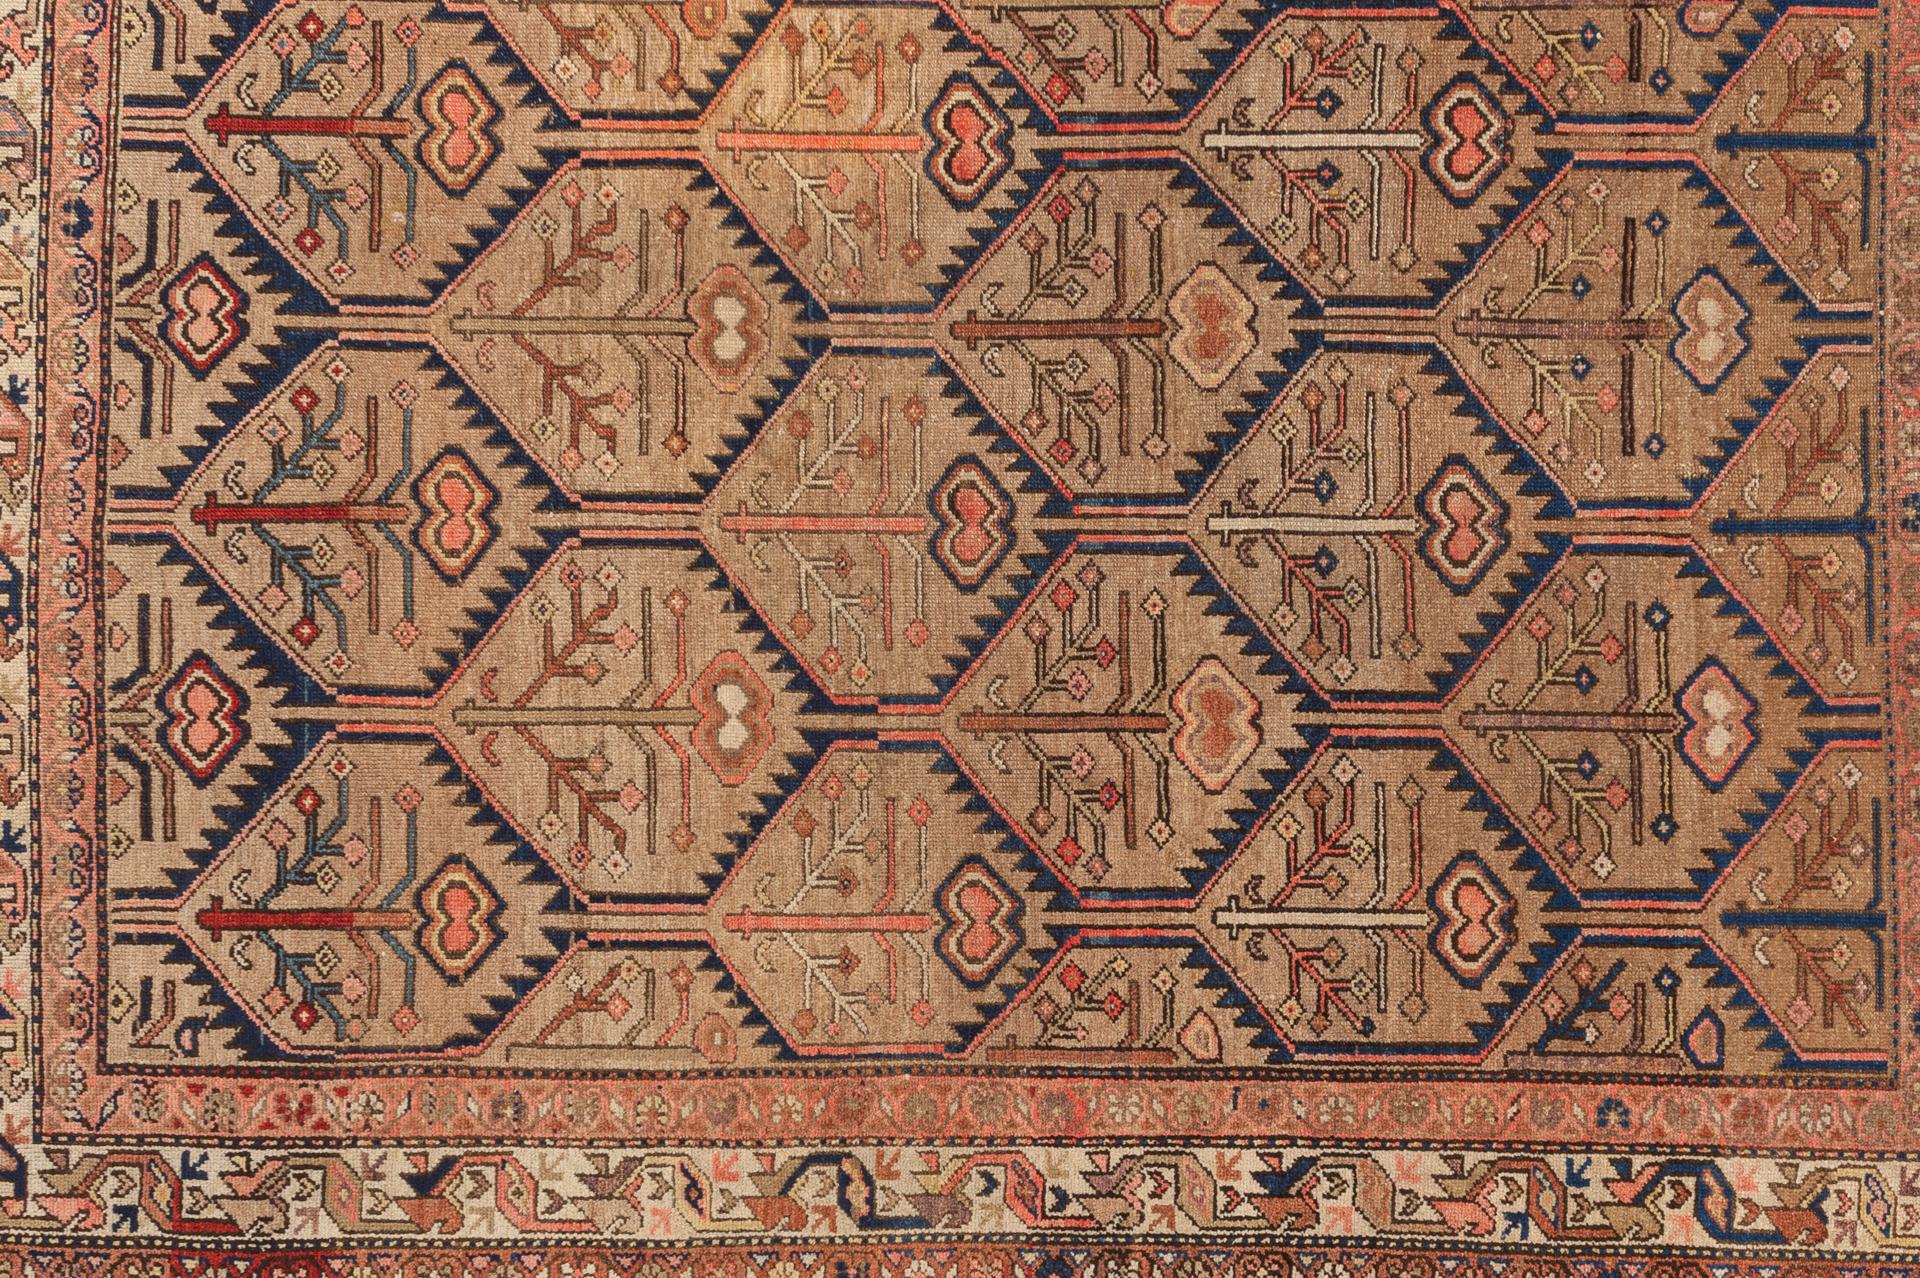 Kazakhstani Center Asia Carpet For Sale